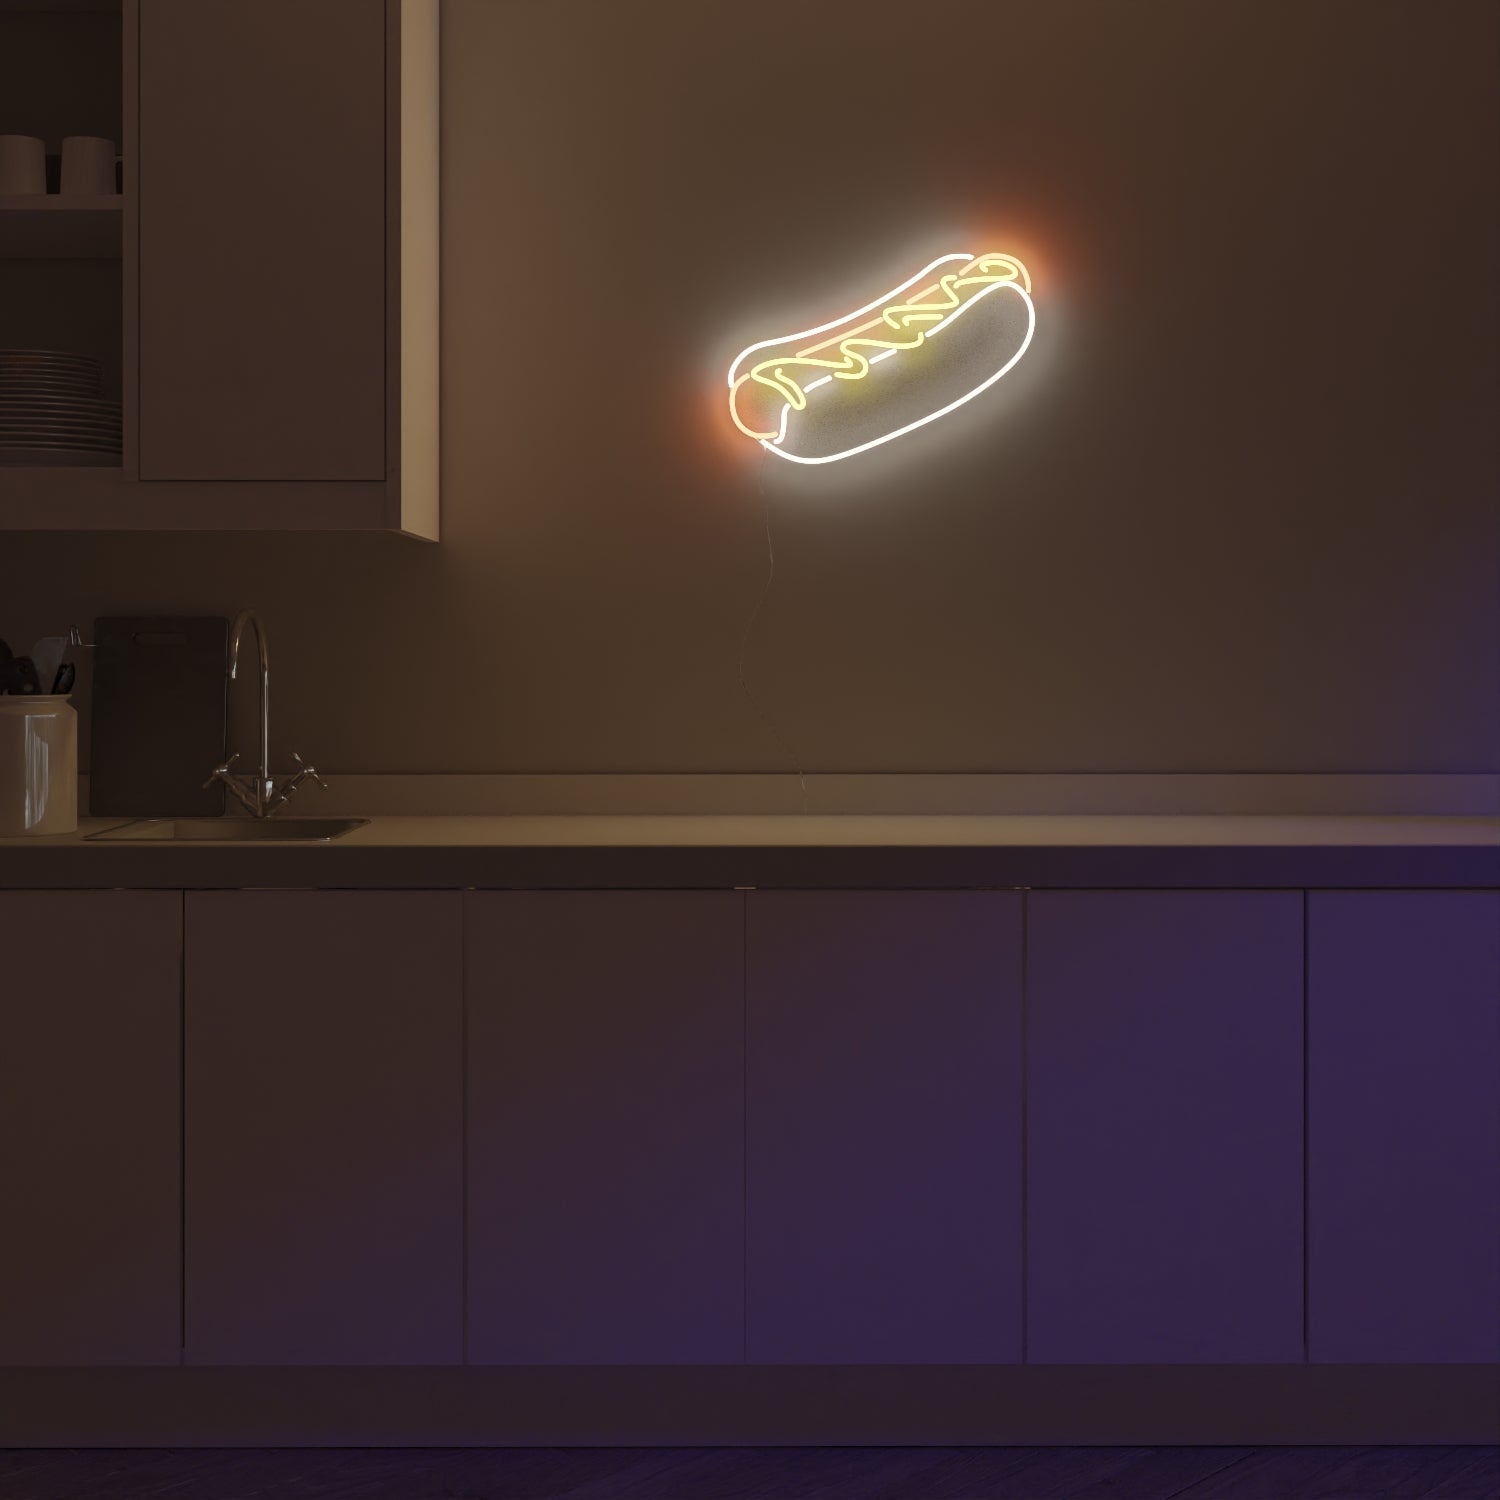 Hot Dog, Neon Tabela - Neonbir